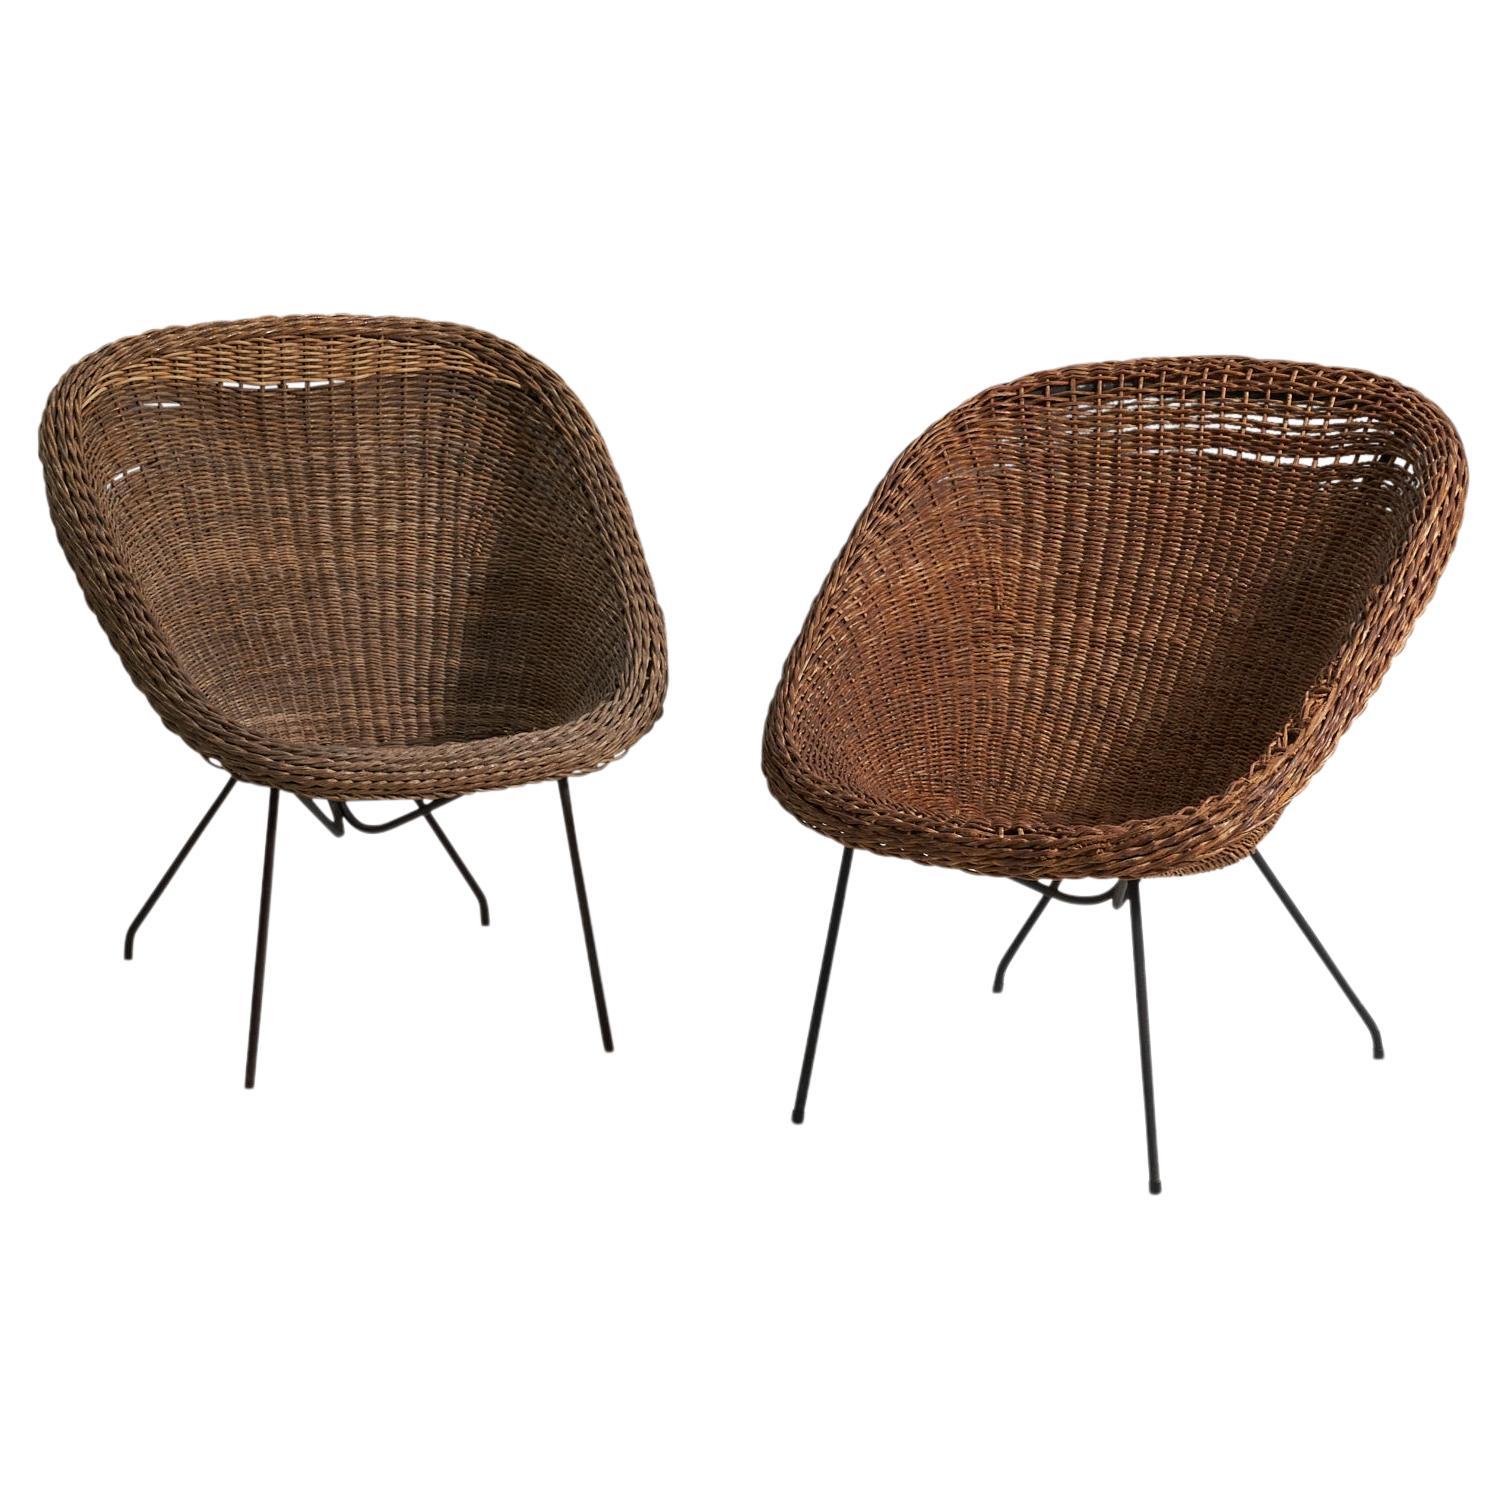 Martin Eisler Carlo Hauner, Lounge Chairs, Rattan, Steel, Forma, Brazil, c. 1955